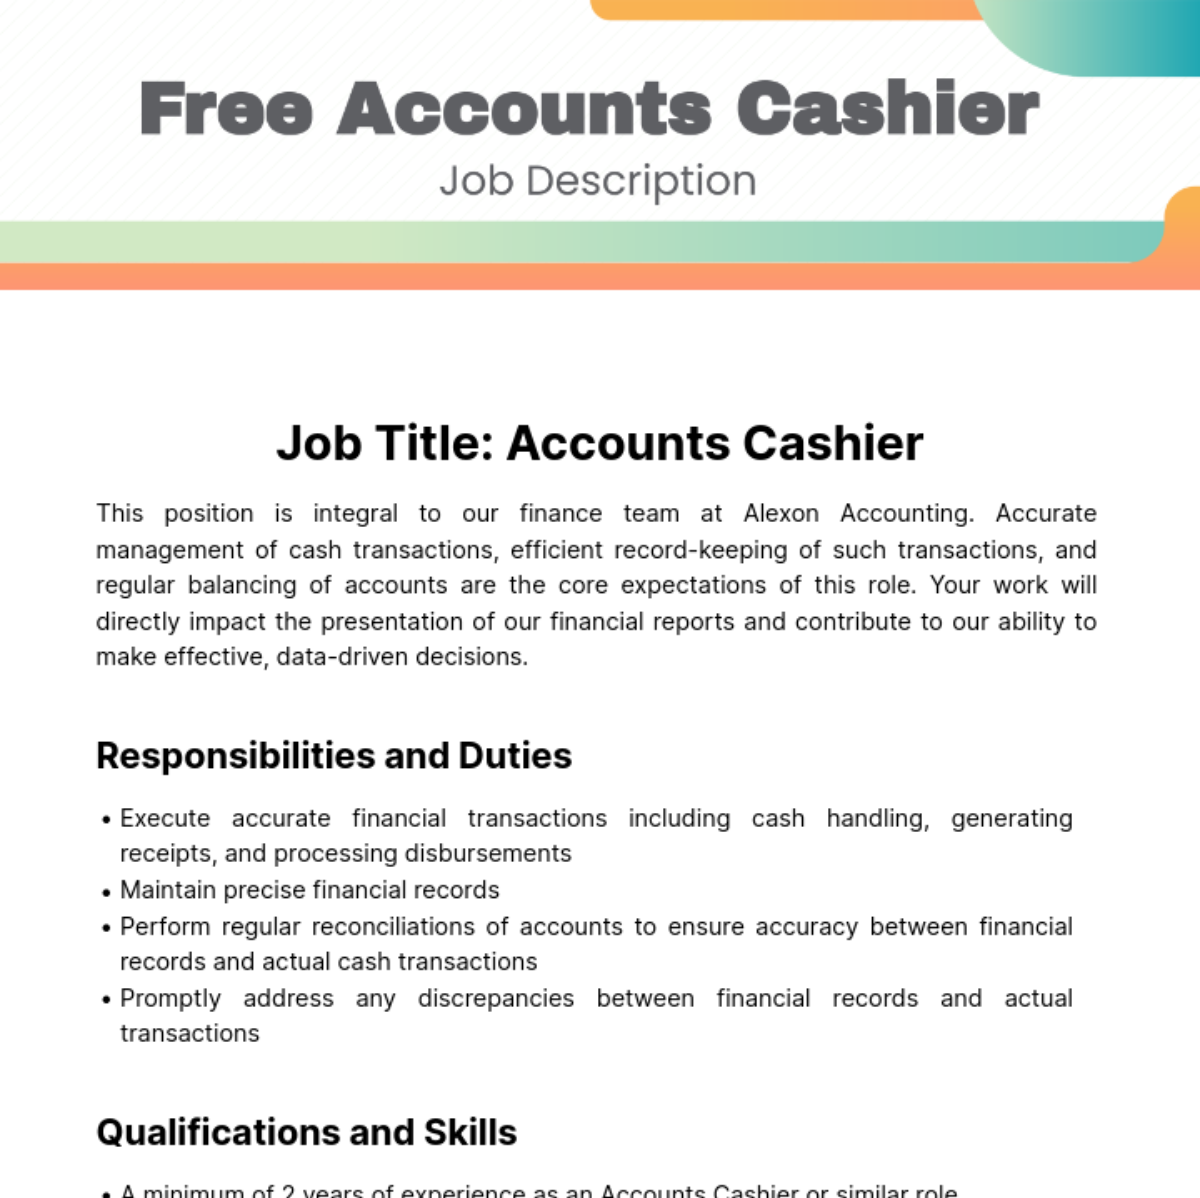 Free Accounts Cashier Job Description Template